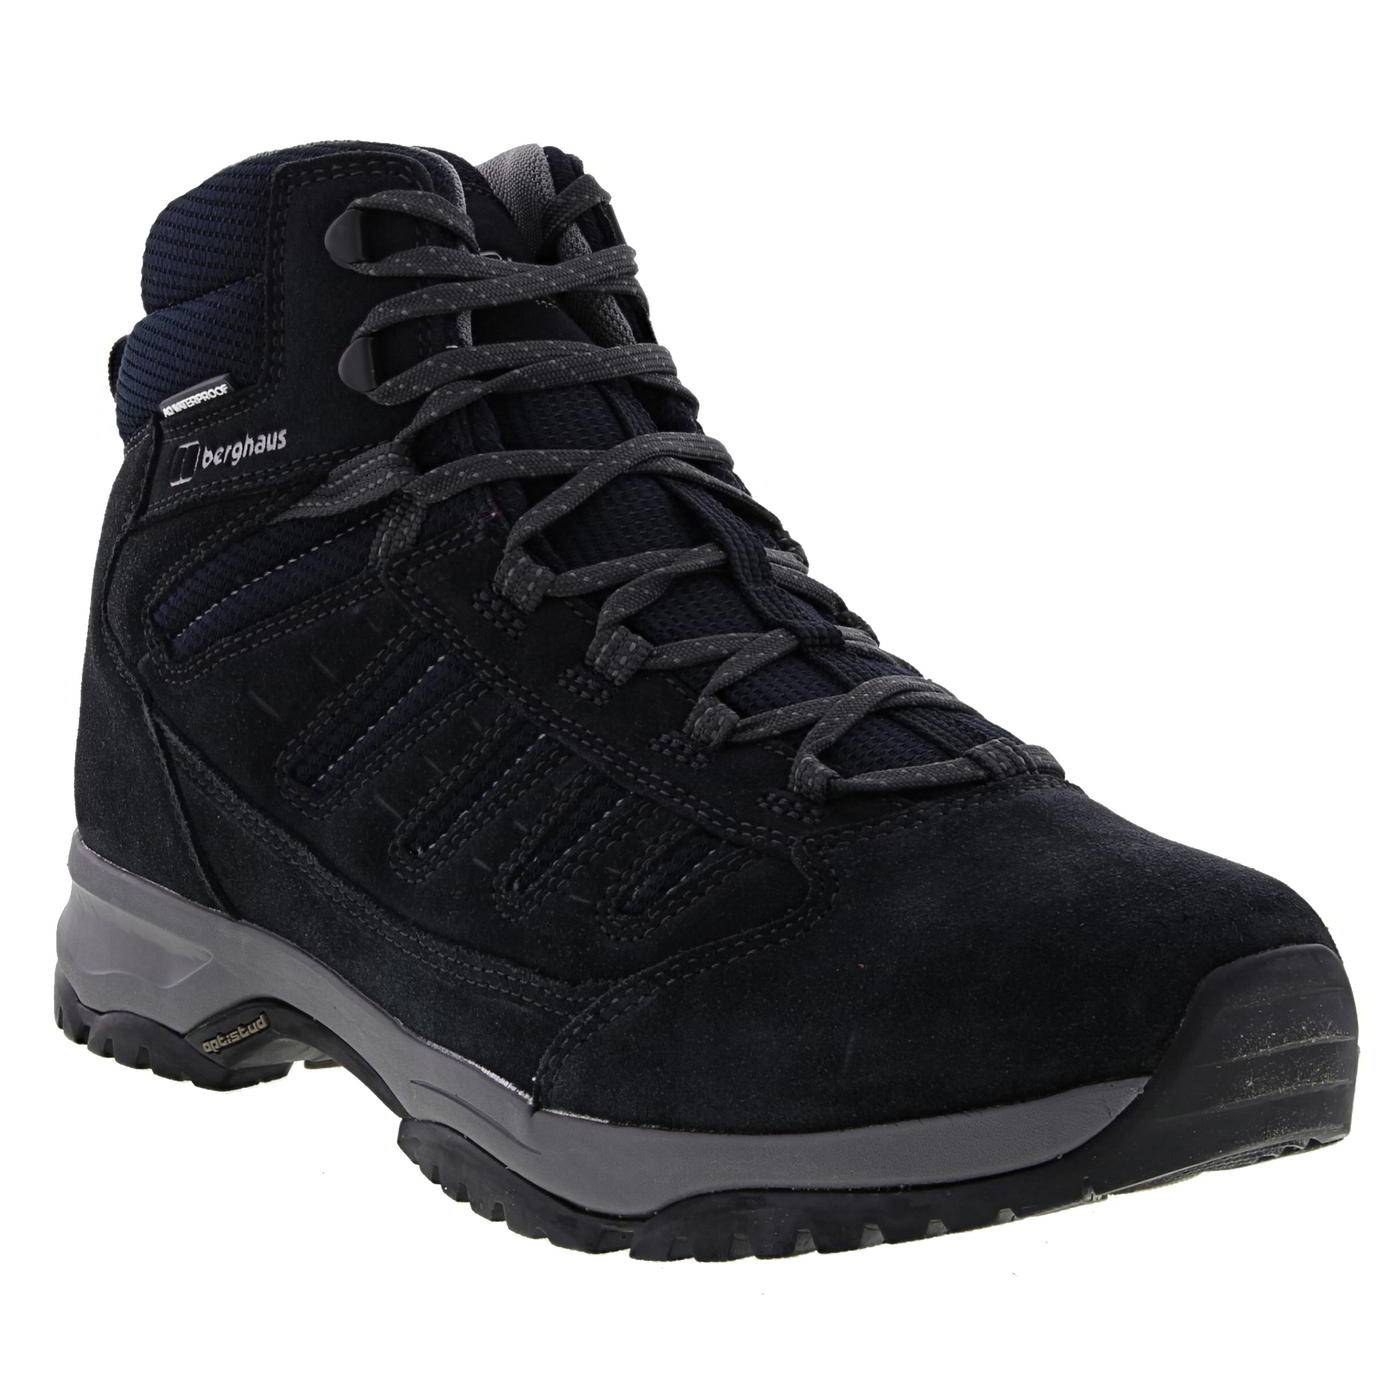 Berghaus Expeditor Trek 2.0 Mens Black Waterproof Walking Hiking Boots Size 8-11 